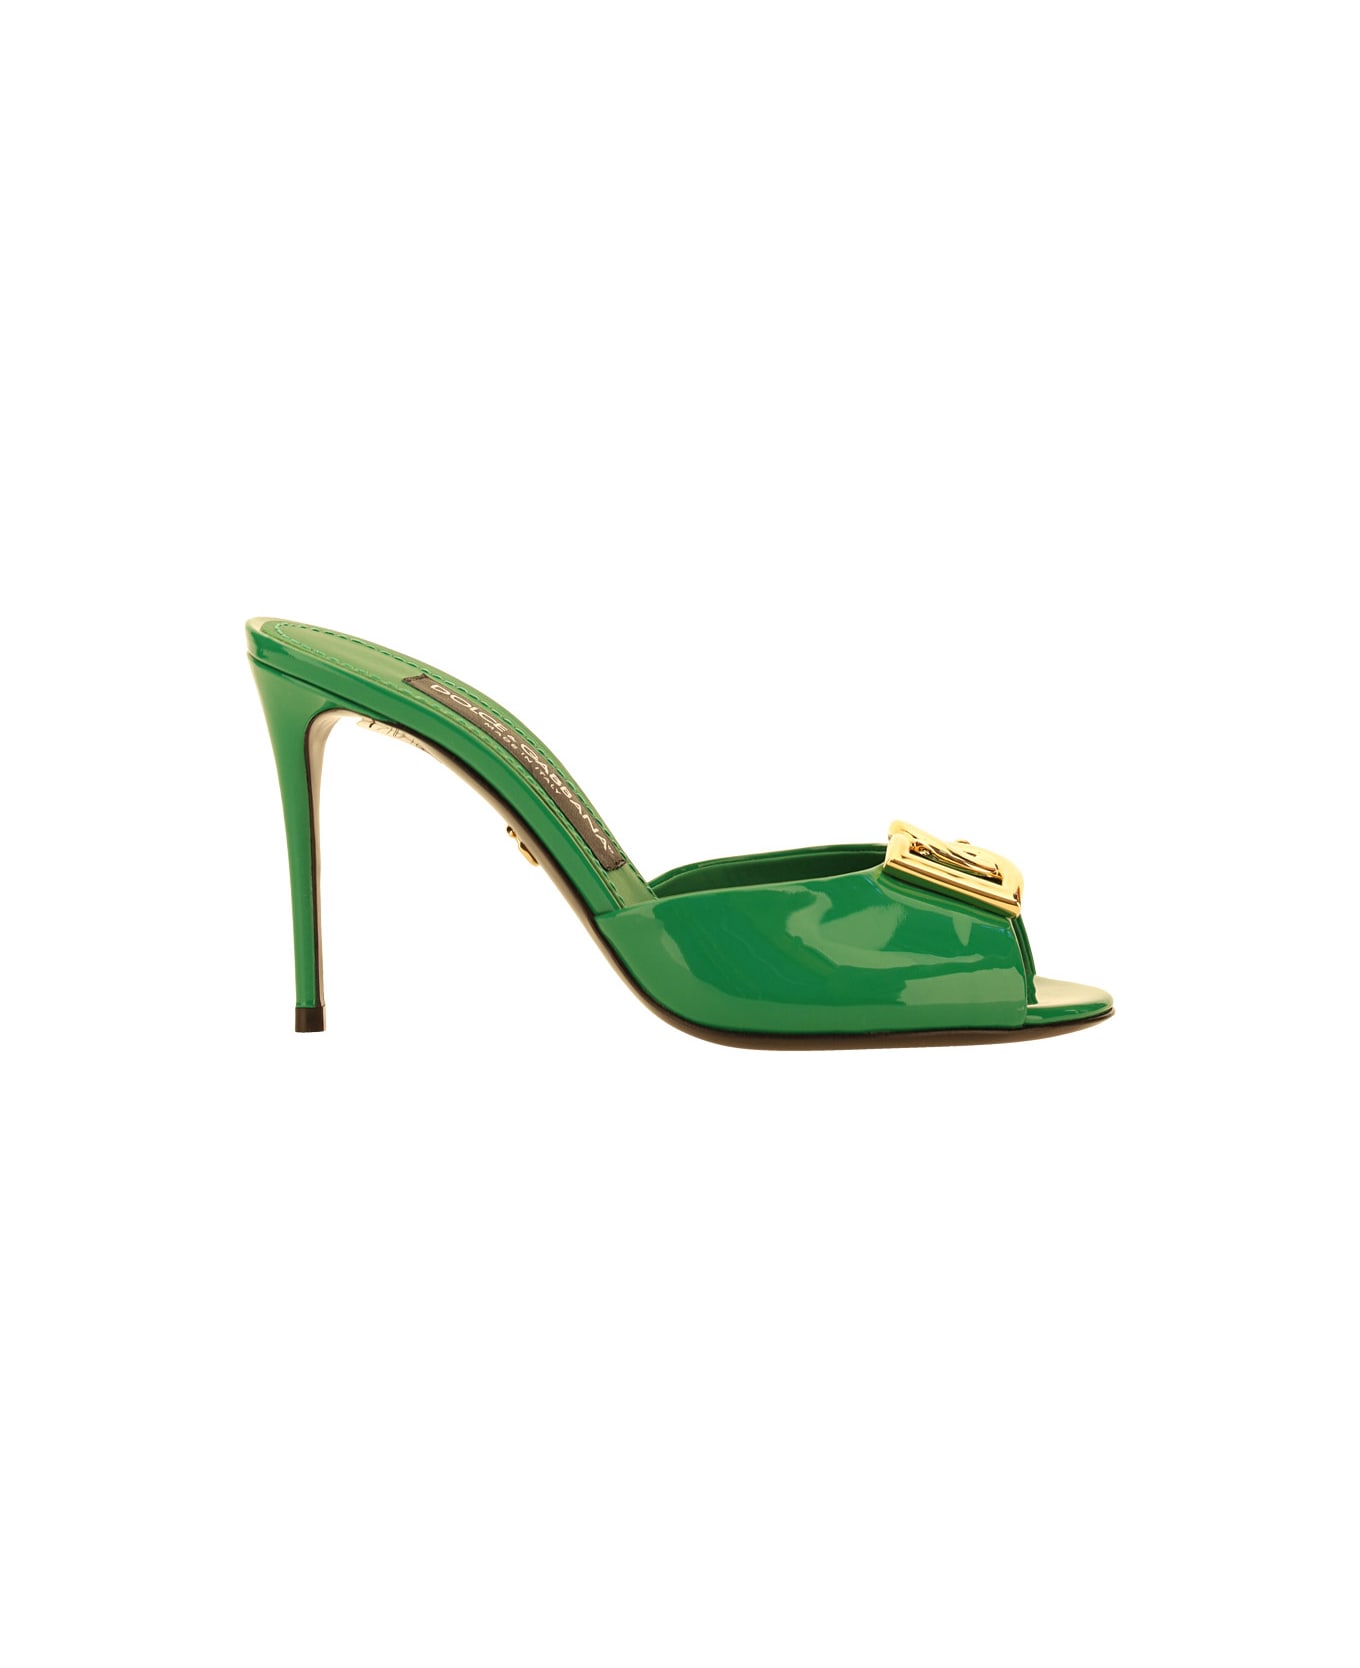 Dolce & Gabbana Sandals - Verde Intenso